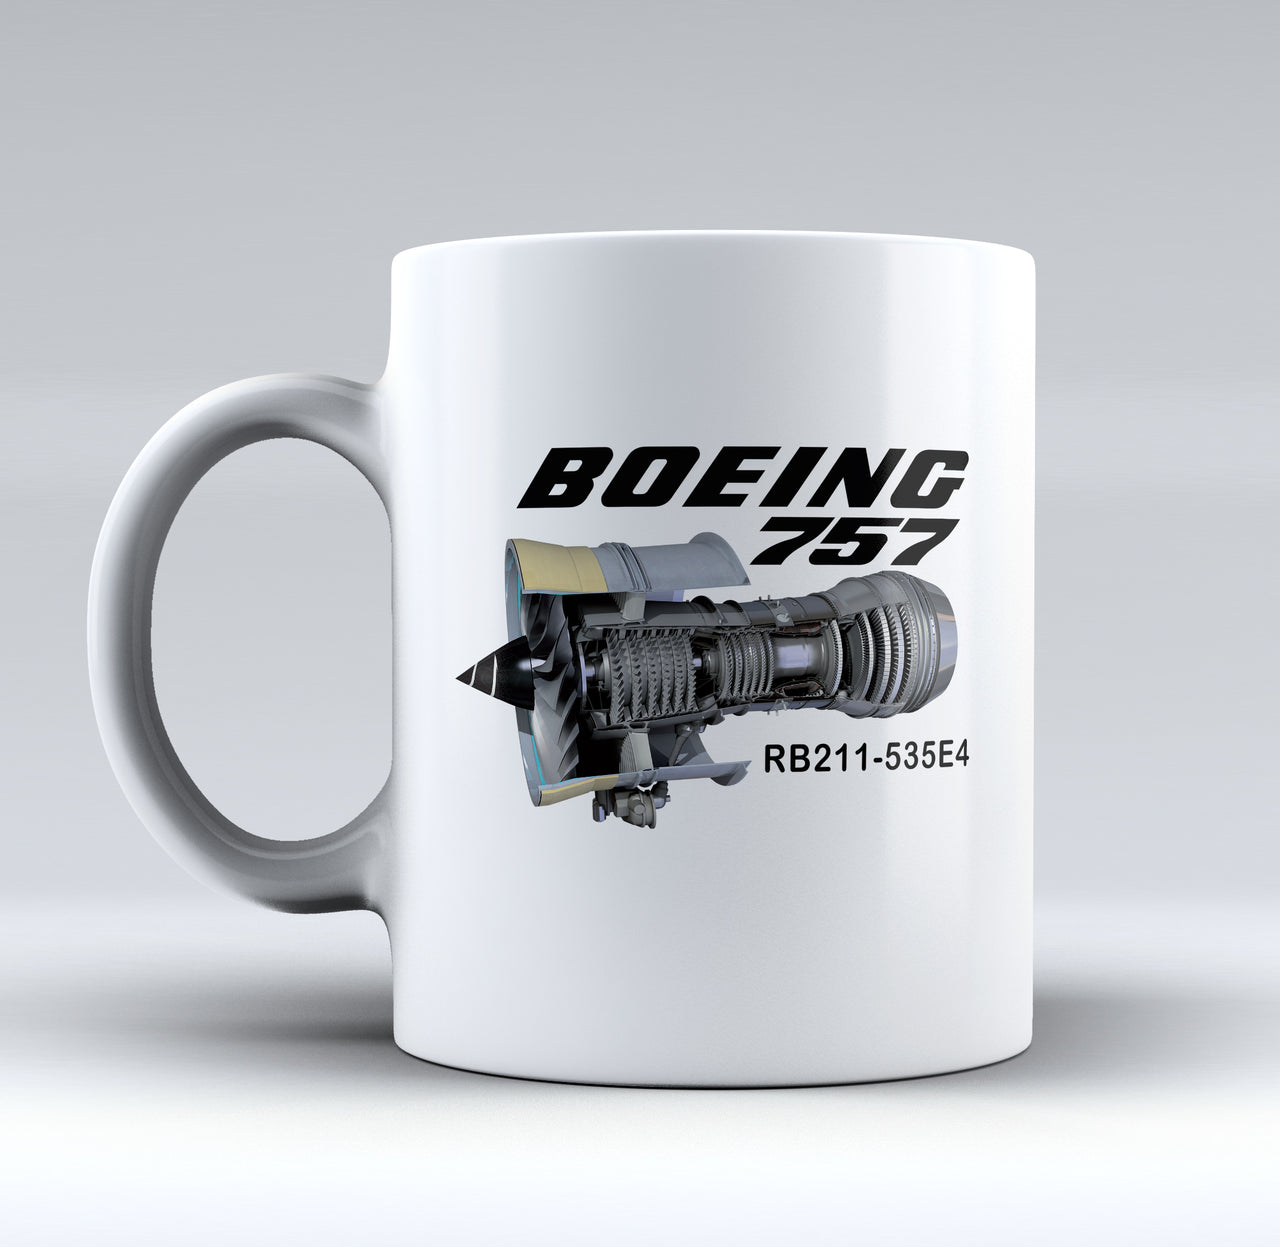 Boeing 757 & Rolls Royce Engine (RB211) Designed Mugs